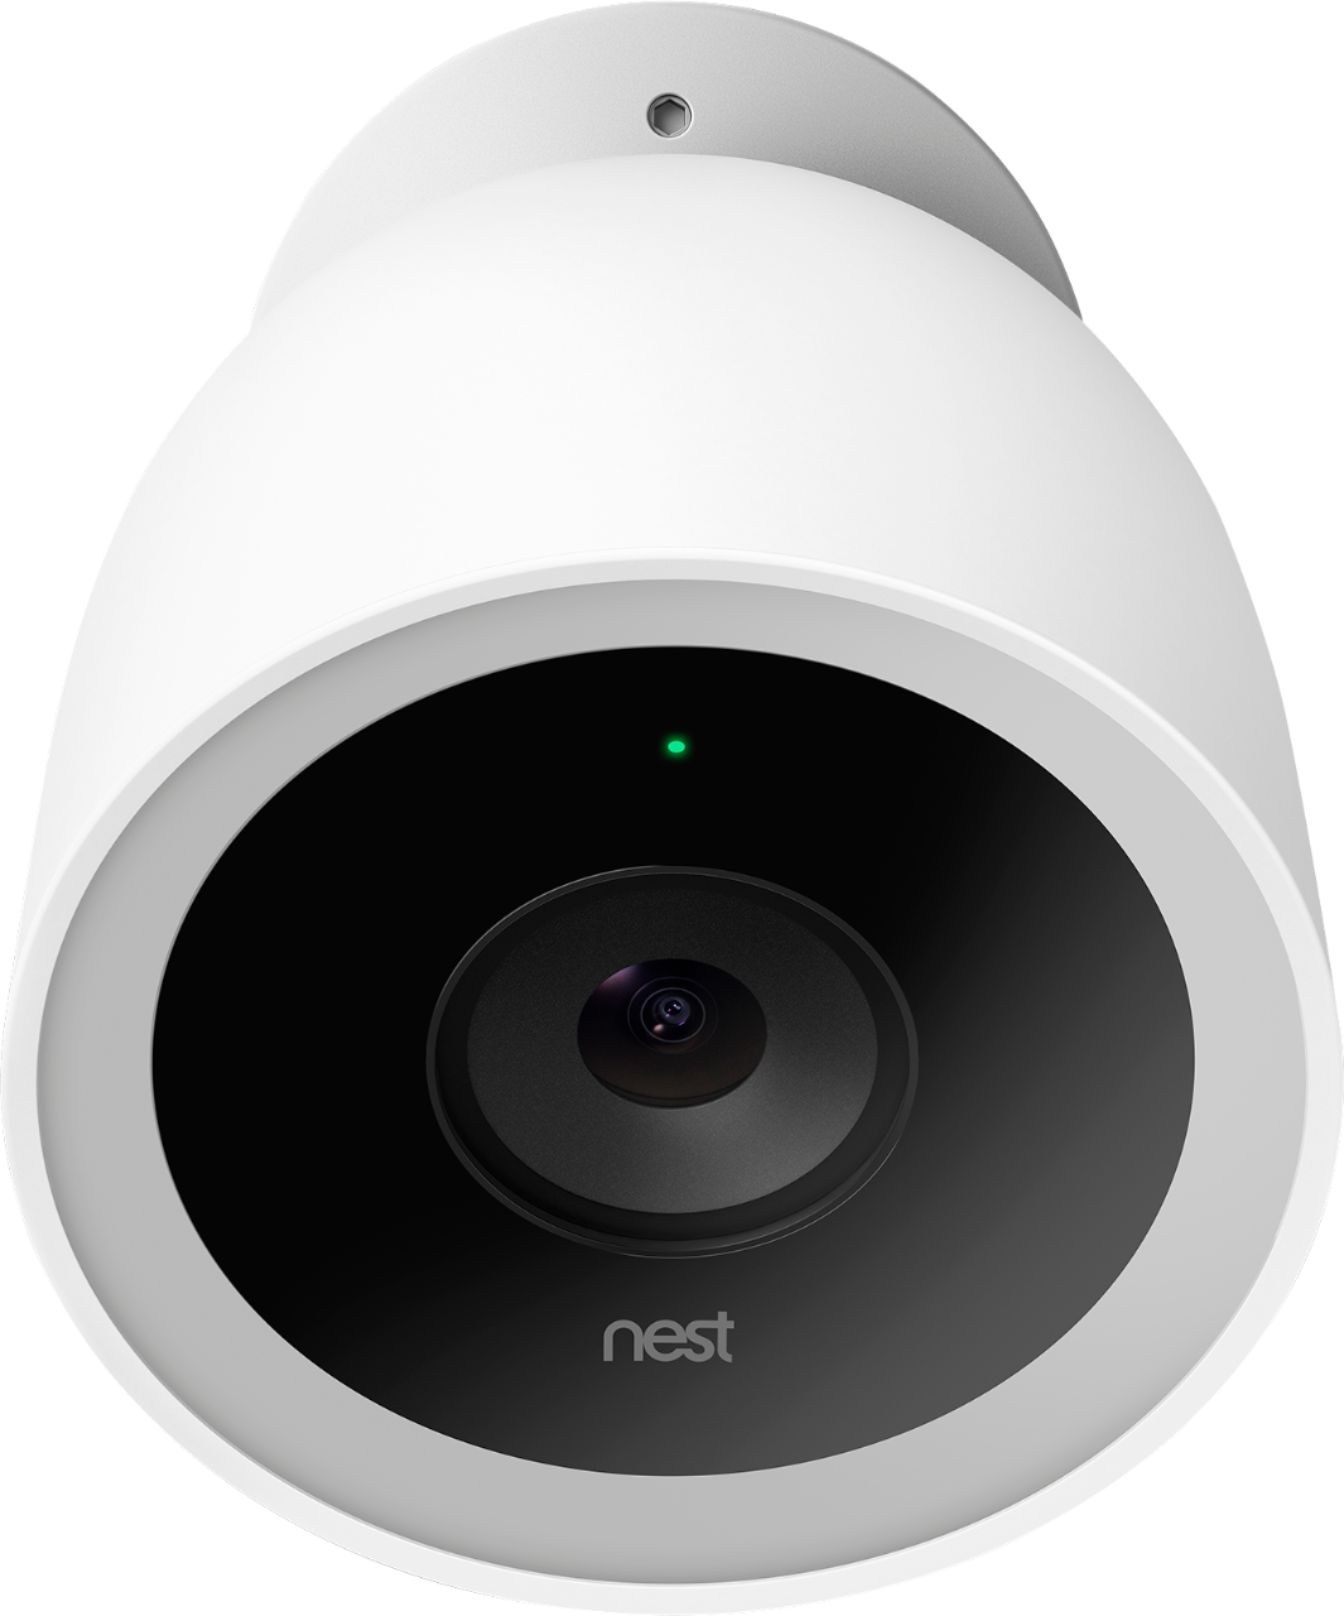 google-nest-2-pack-outdoor-camera-photos